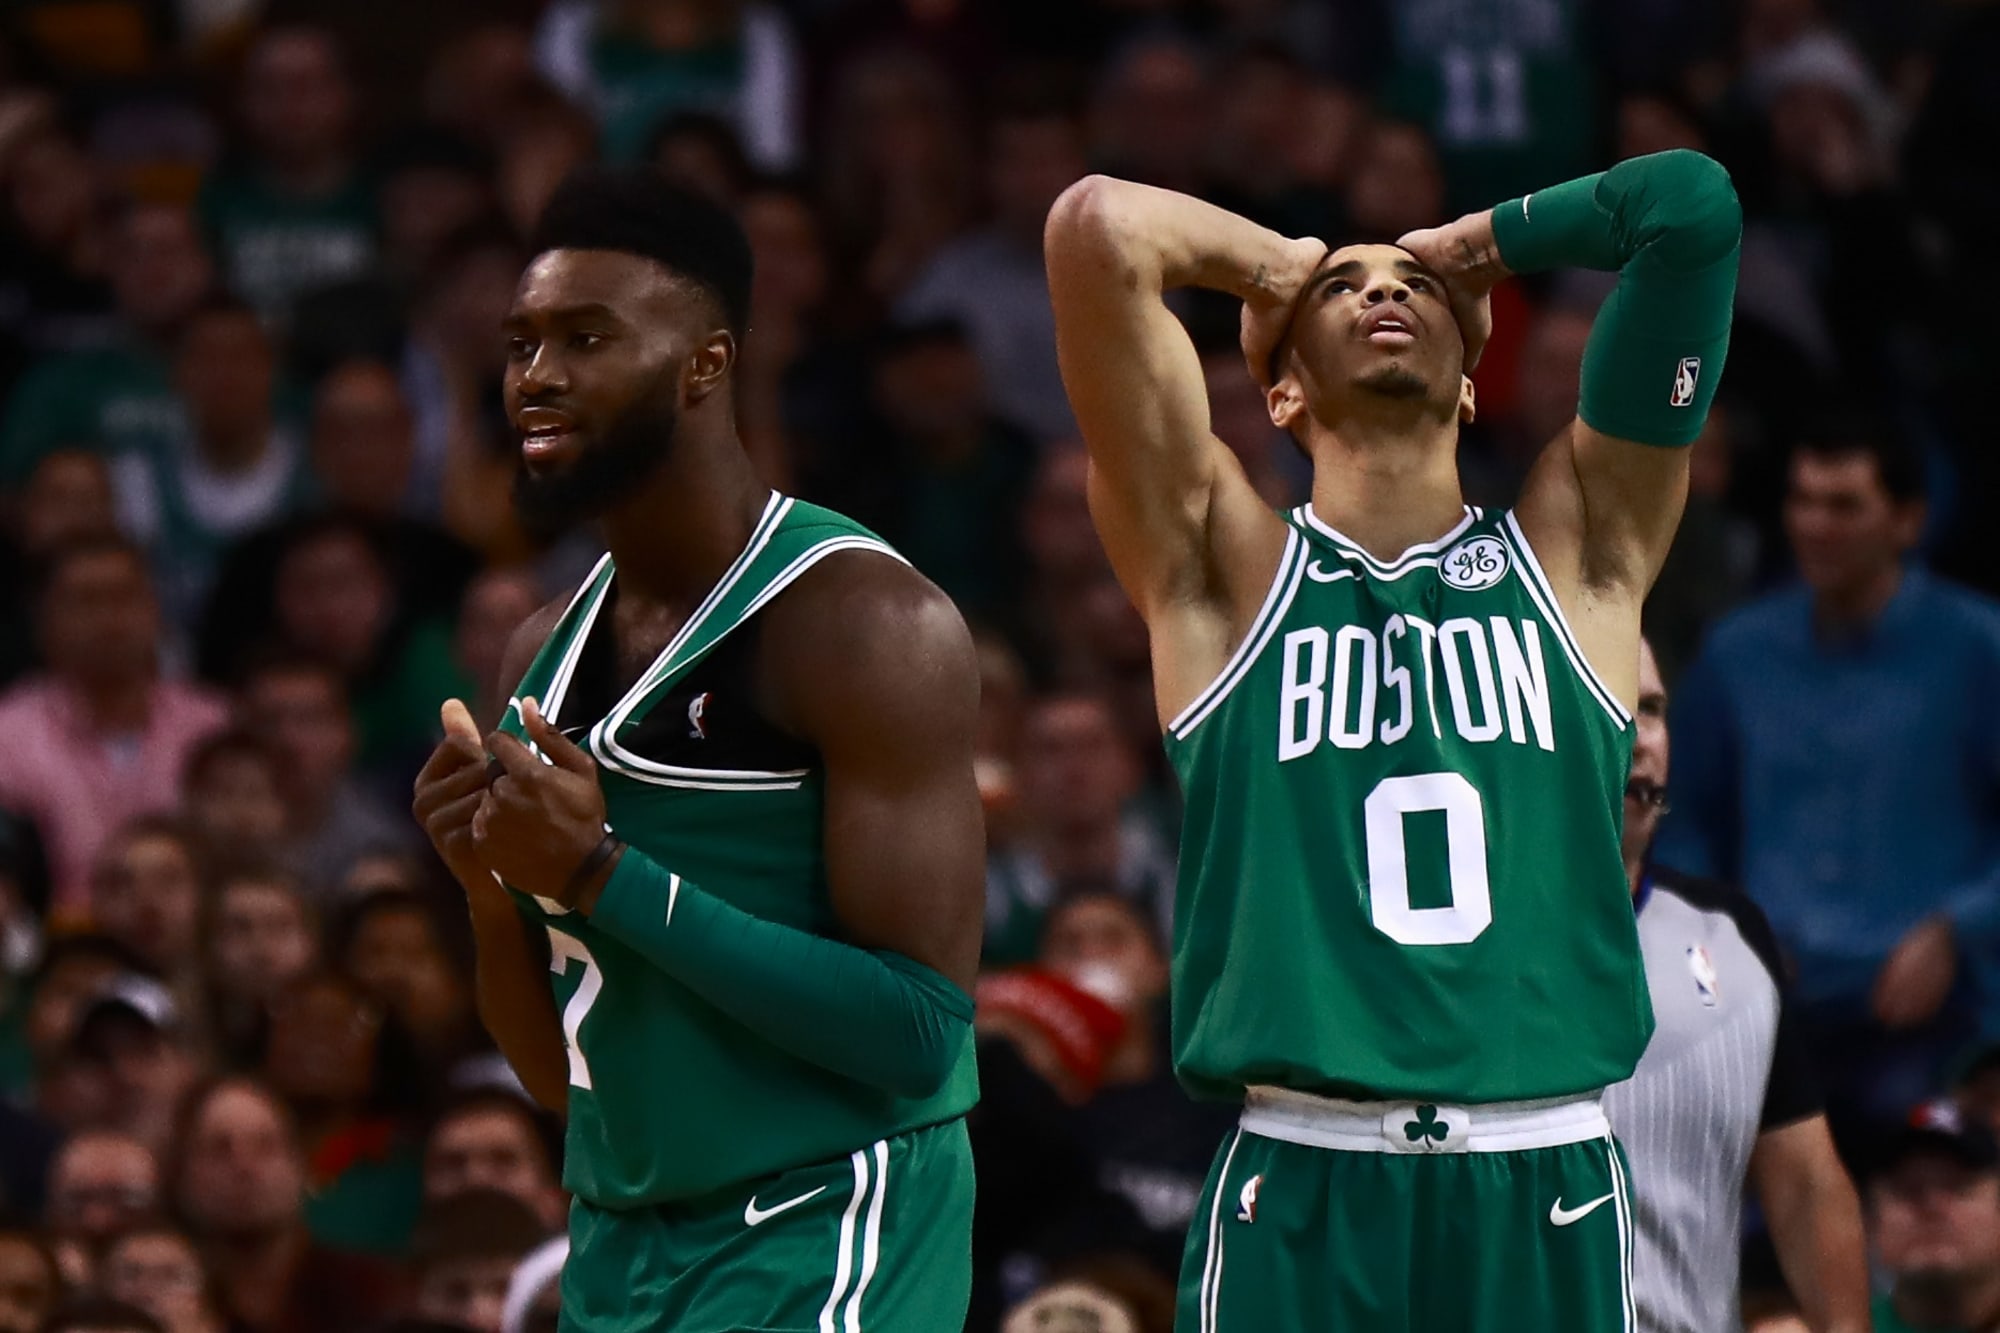 Who's that new guy? Meet Guerschon Yabusele, the Celtics' new